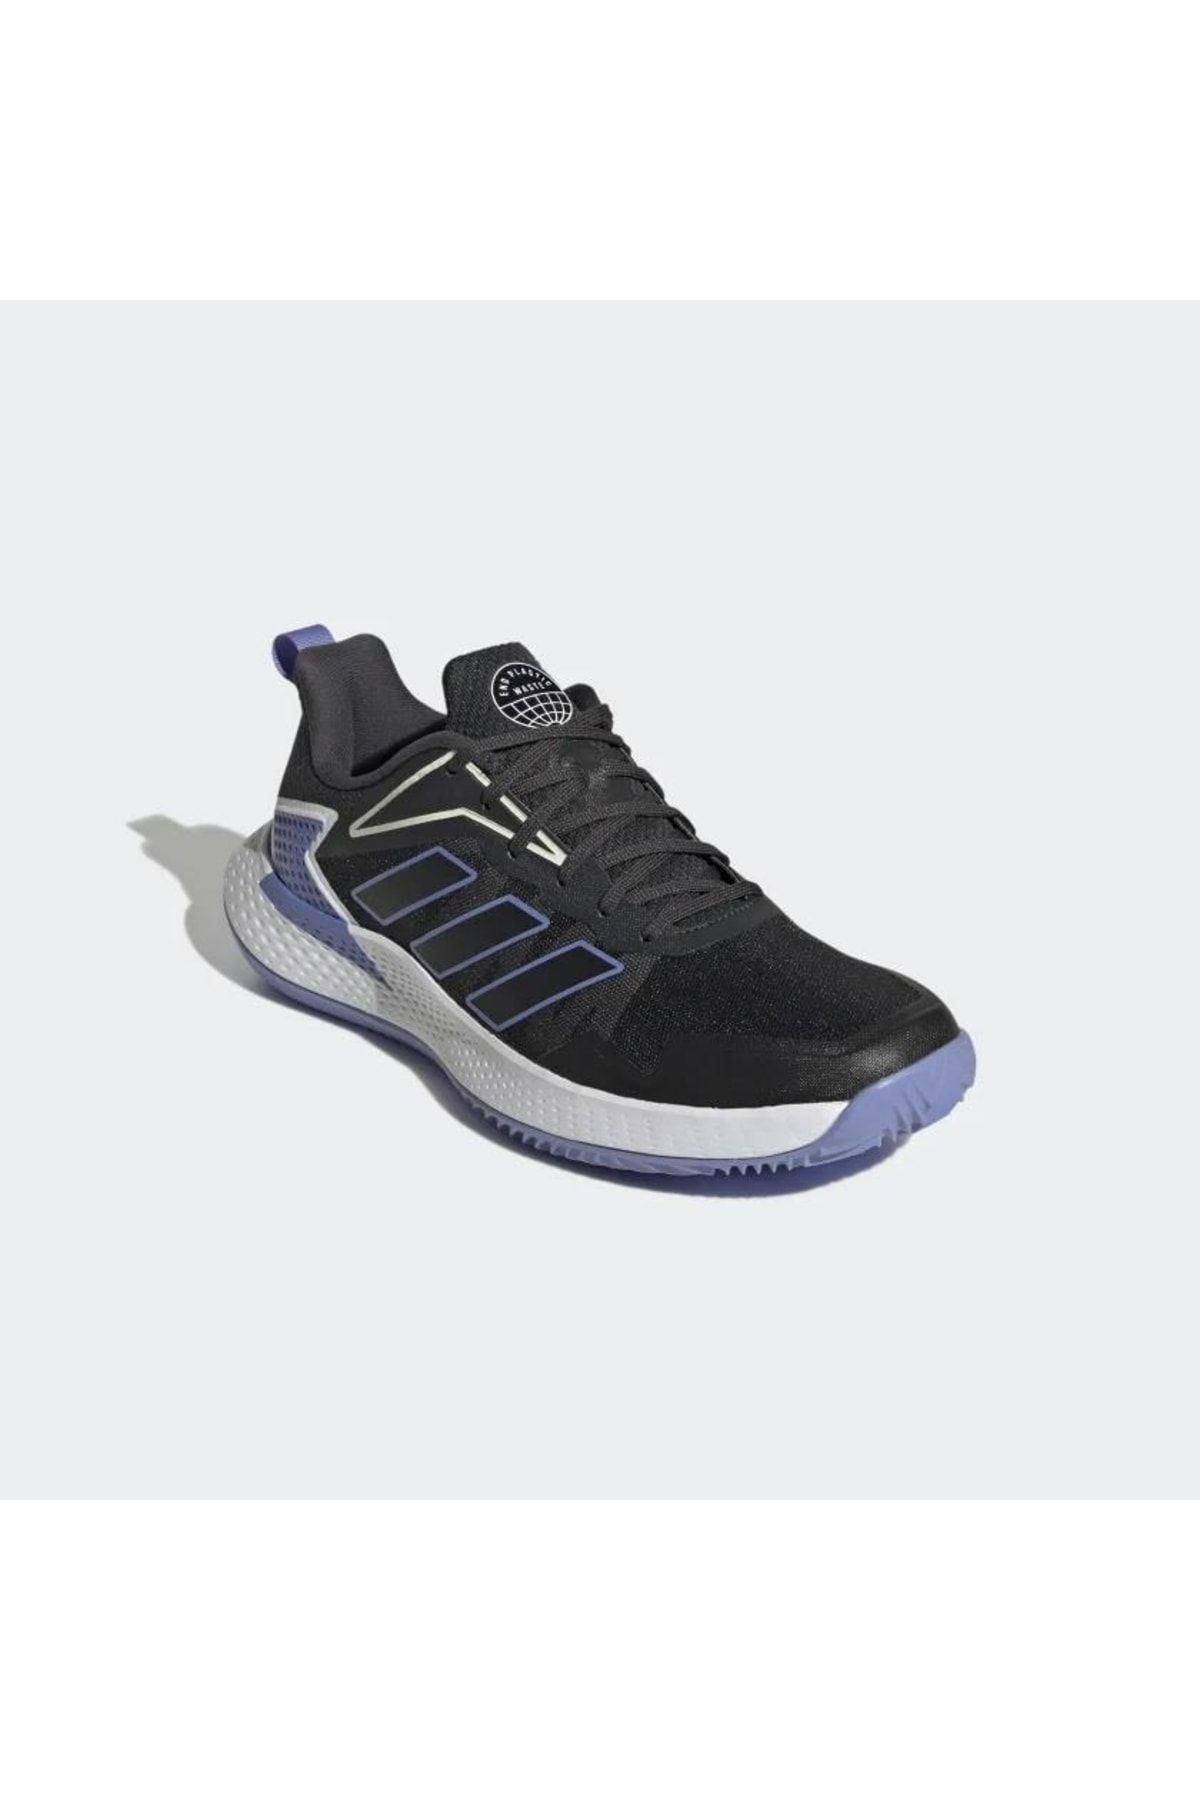 adidas Gx7135 Defiant Speed Toprak Siyah Erkek Tenis Ayakkabısı